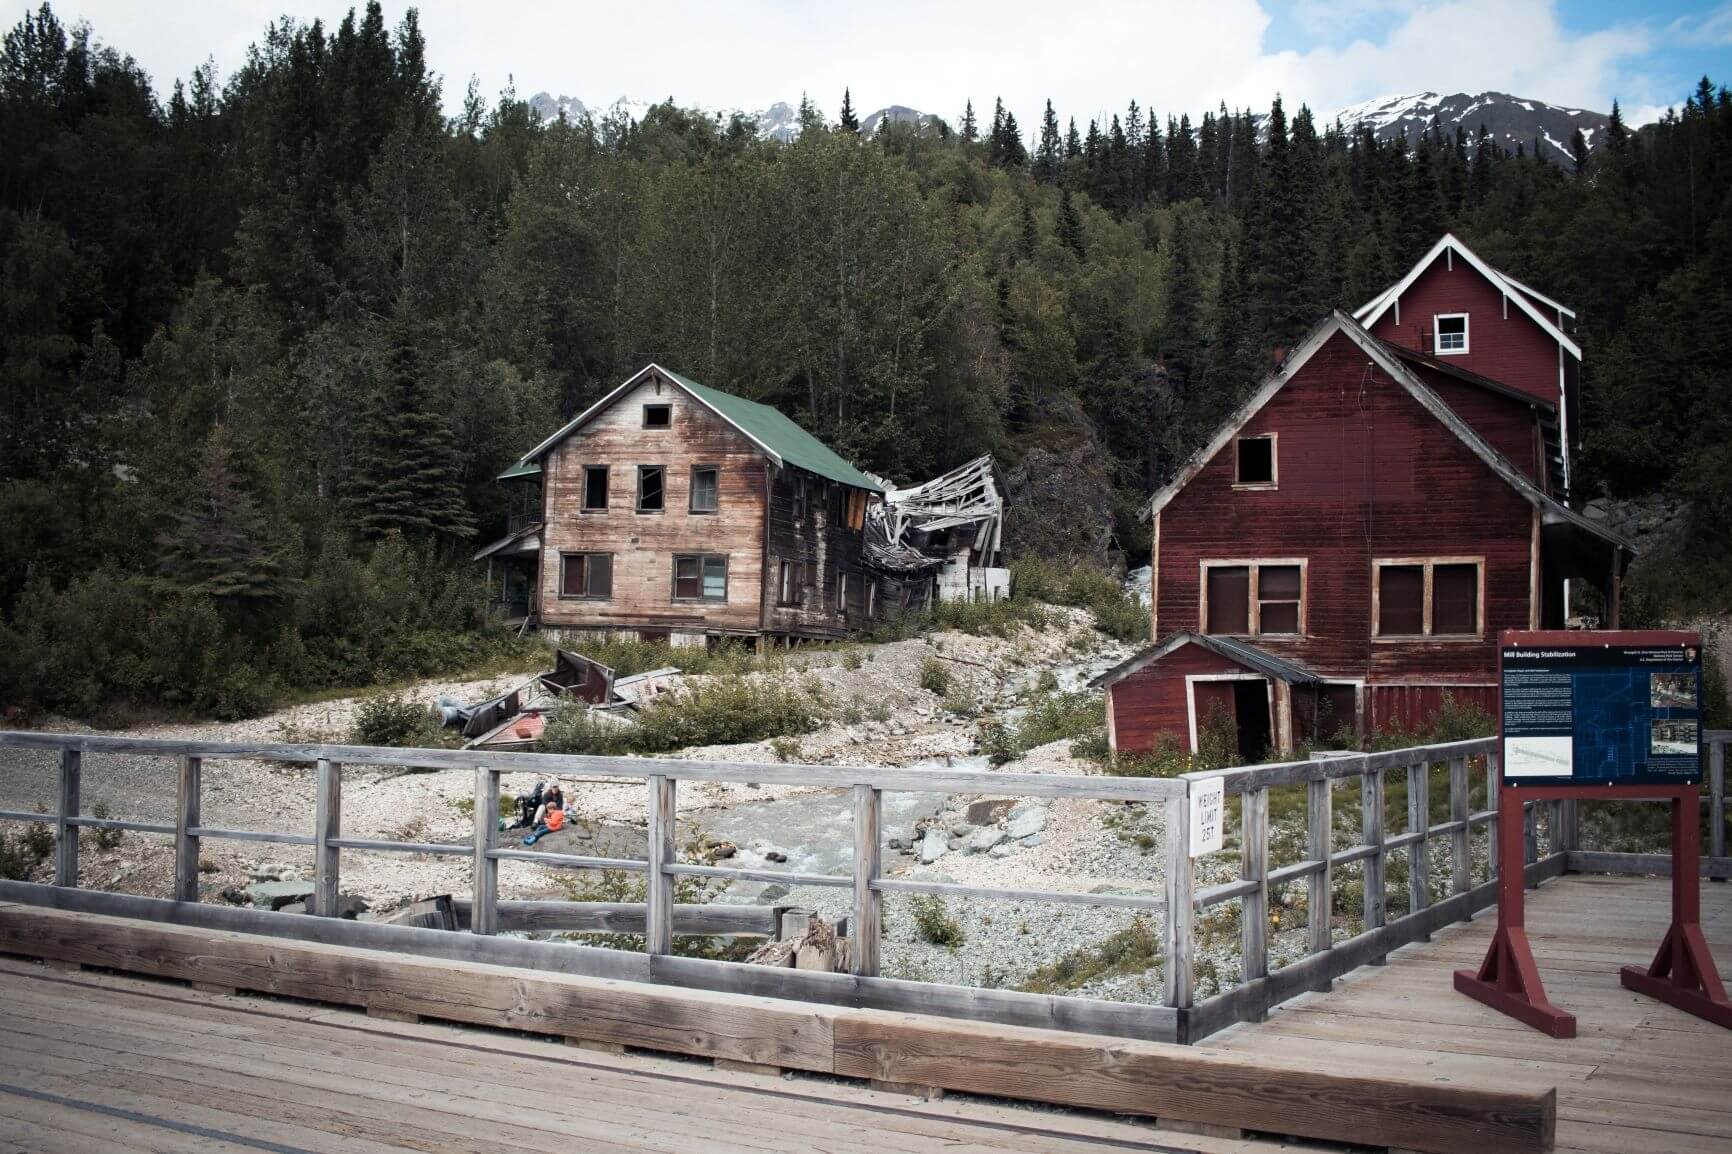 Old mining buildings in Alaska